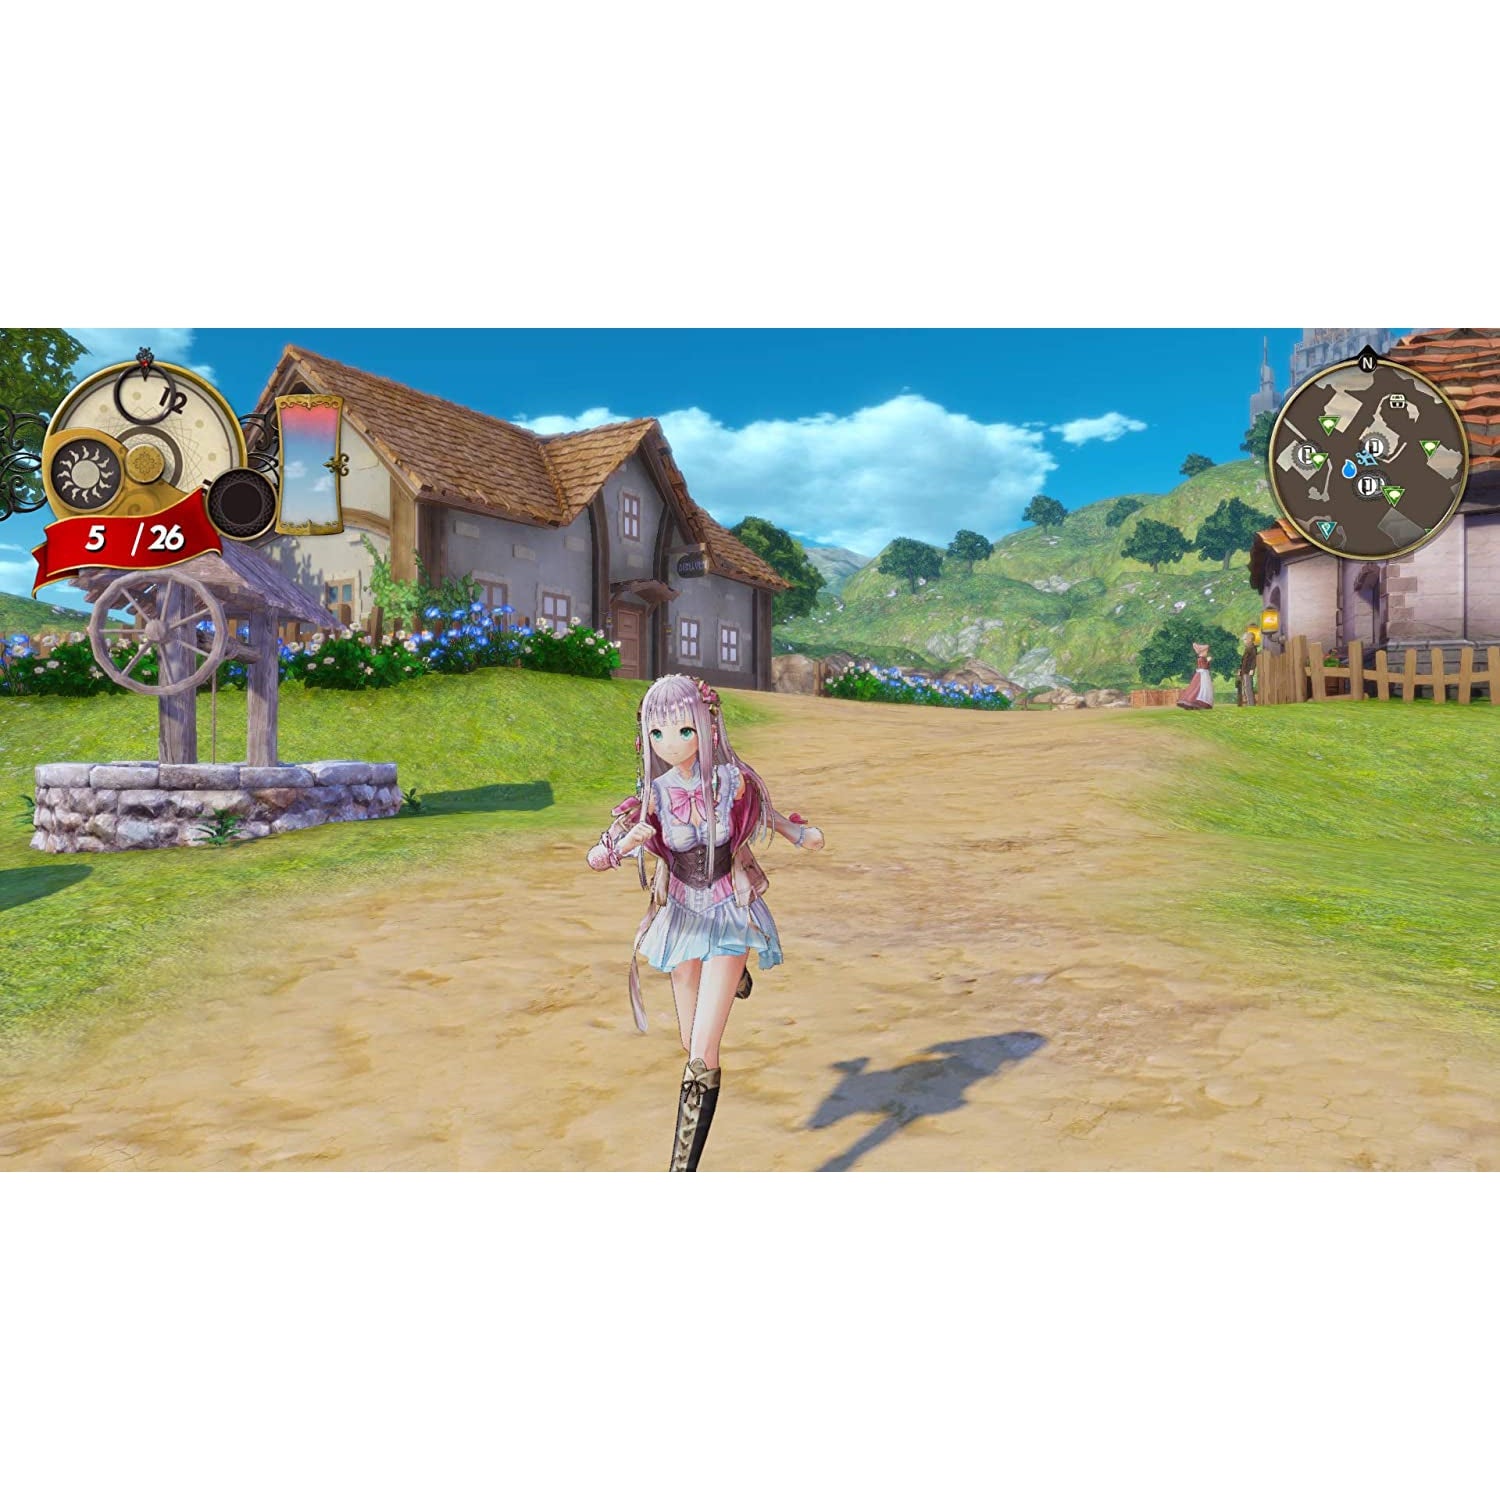 Atelier Lulua: The Scion of Arland (Nintendo Switch)